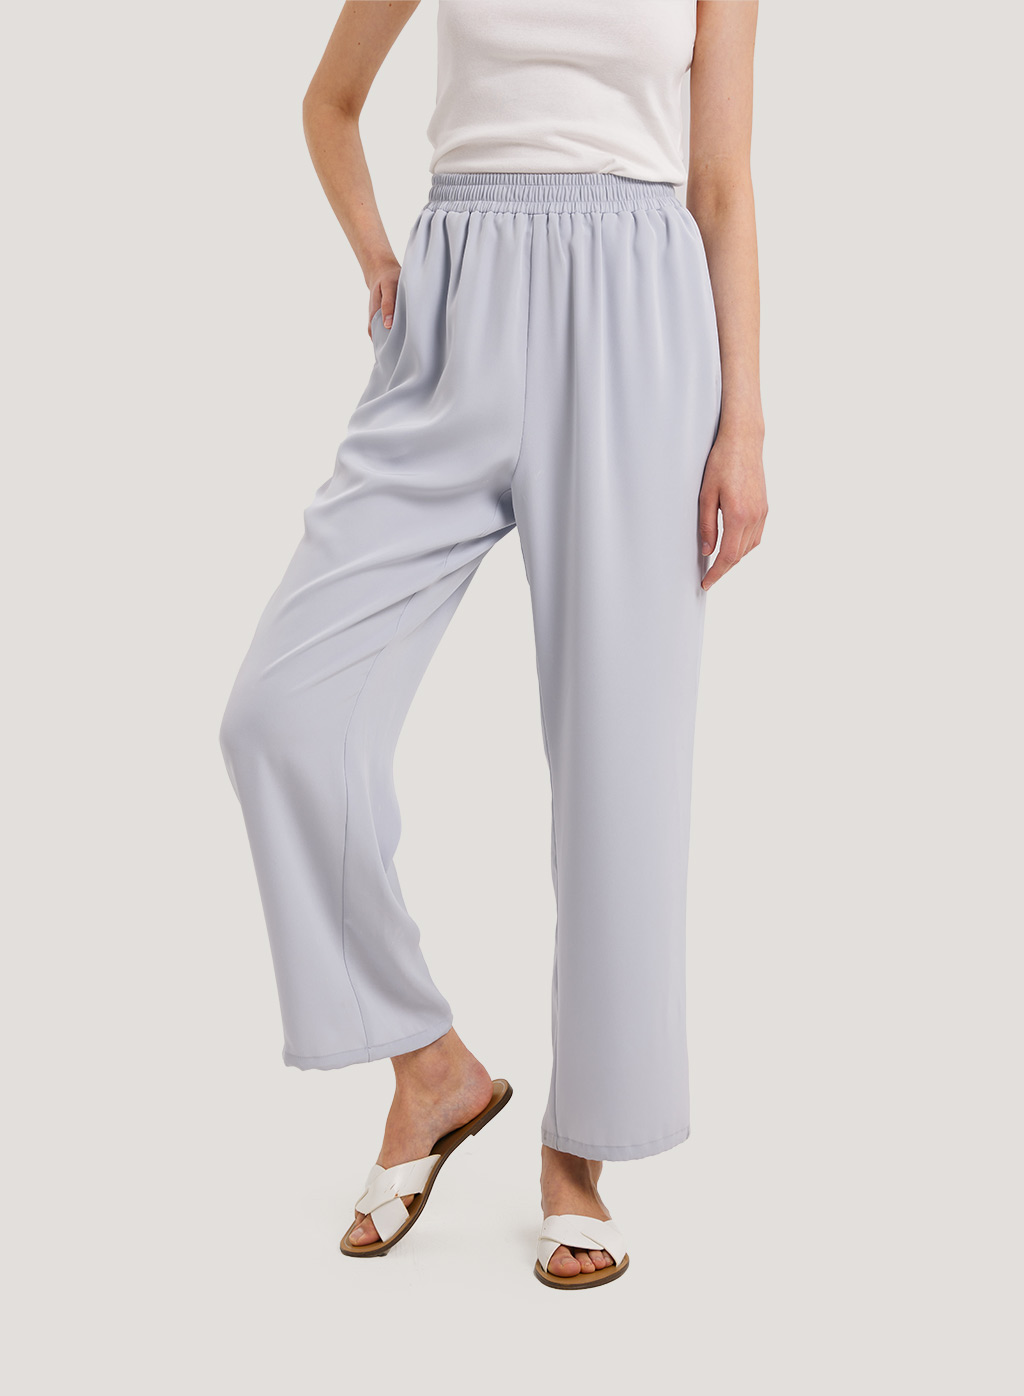 Buffalo Plaid Light Blue Summer Pajama Bottoms Women Womens Pjs Pants for  Women'S Pyjamas X-Small at Amazon Women's Clothing store